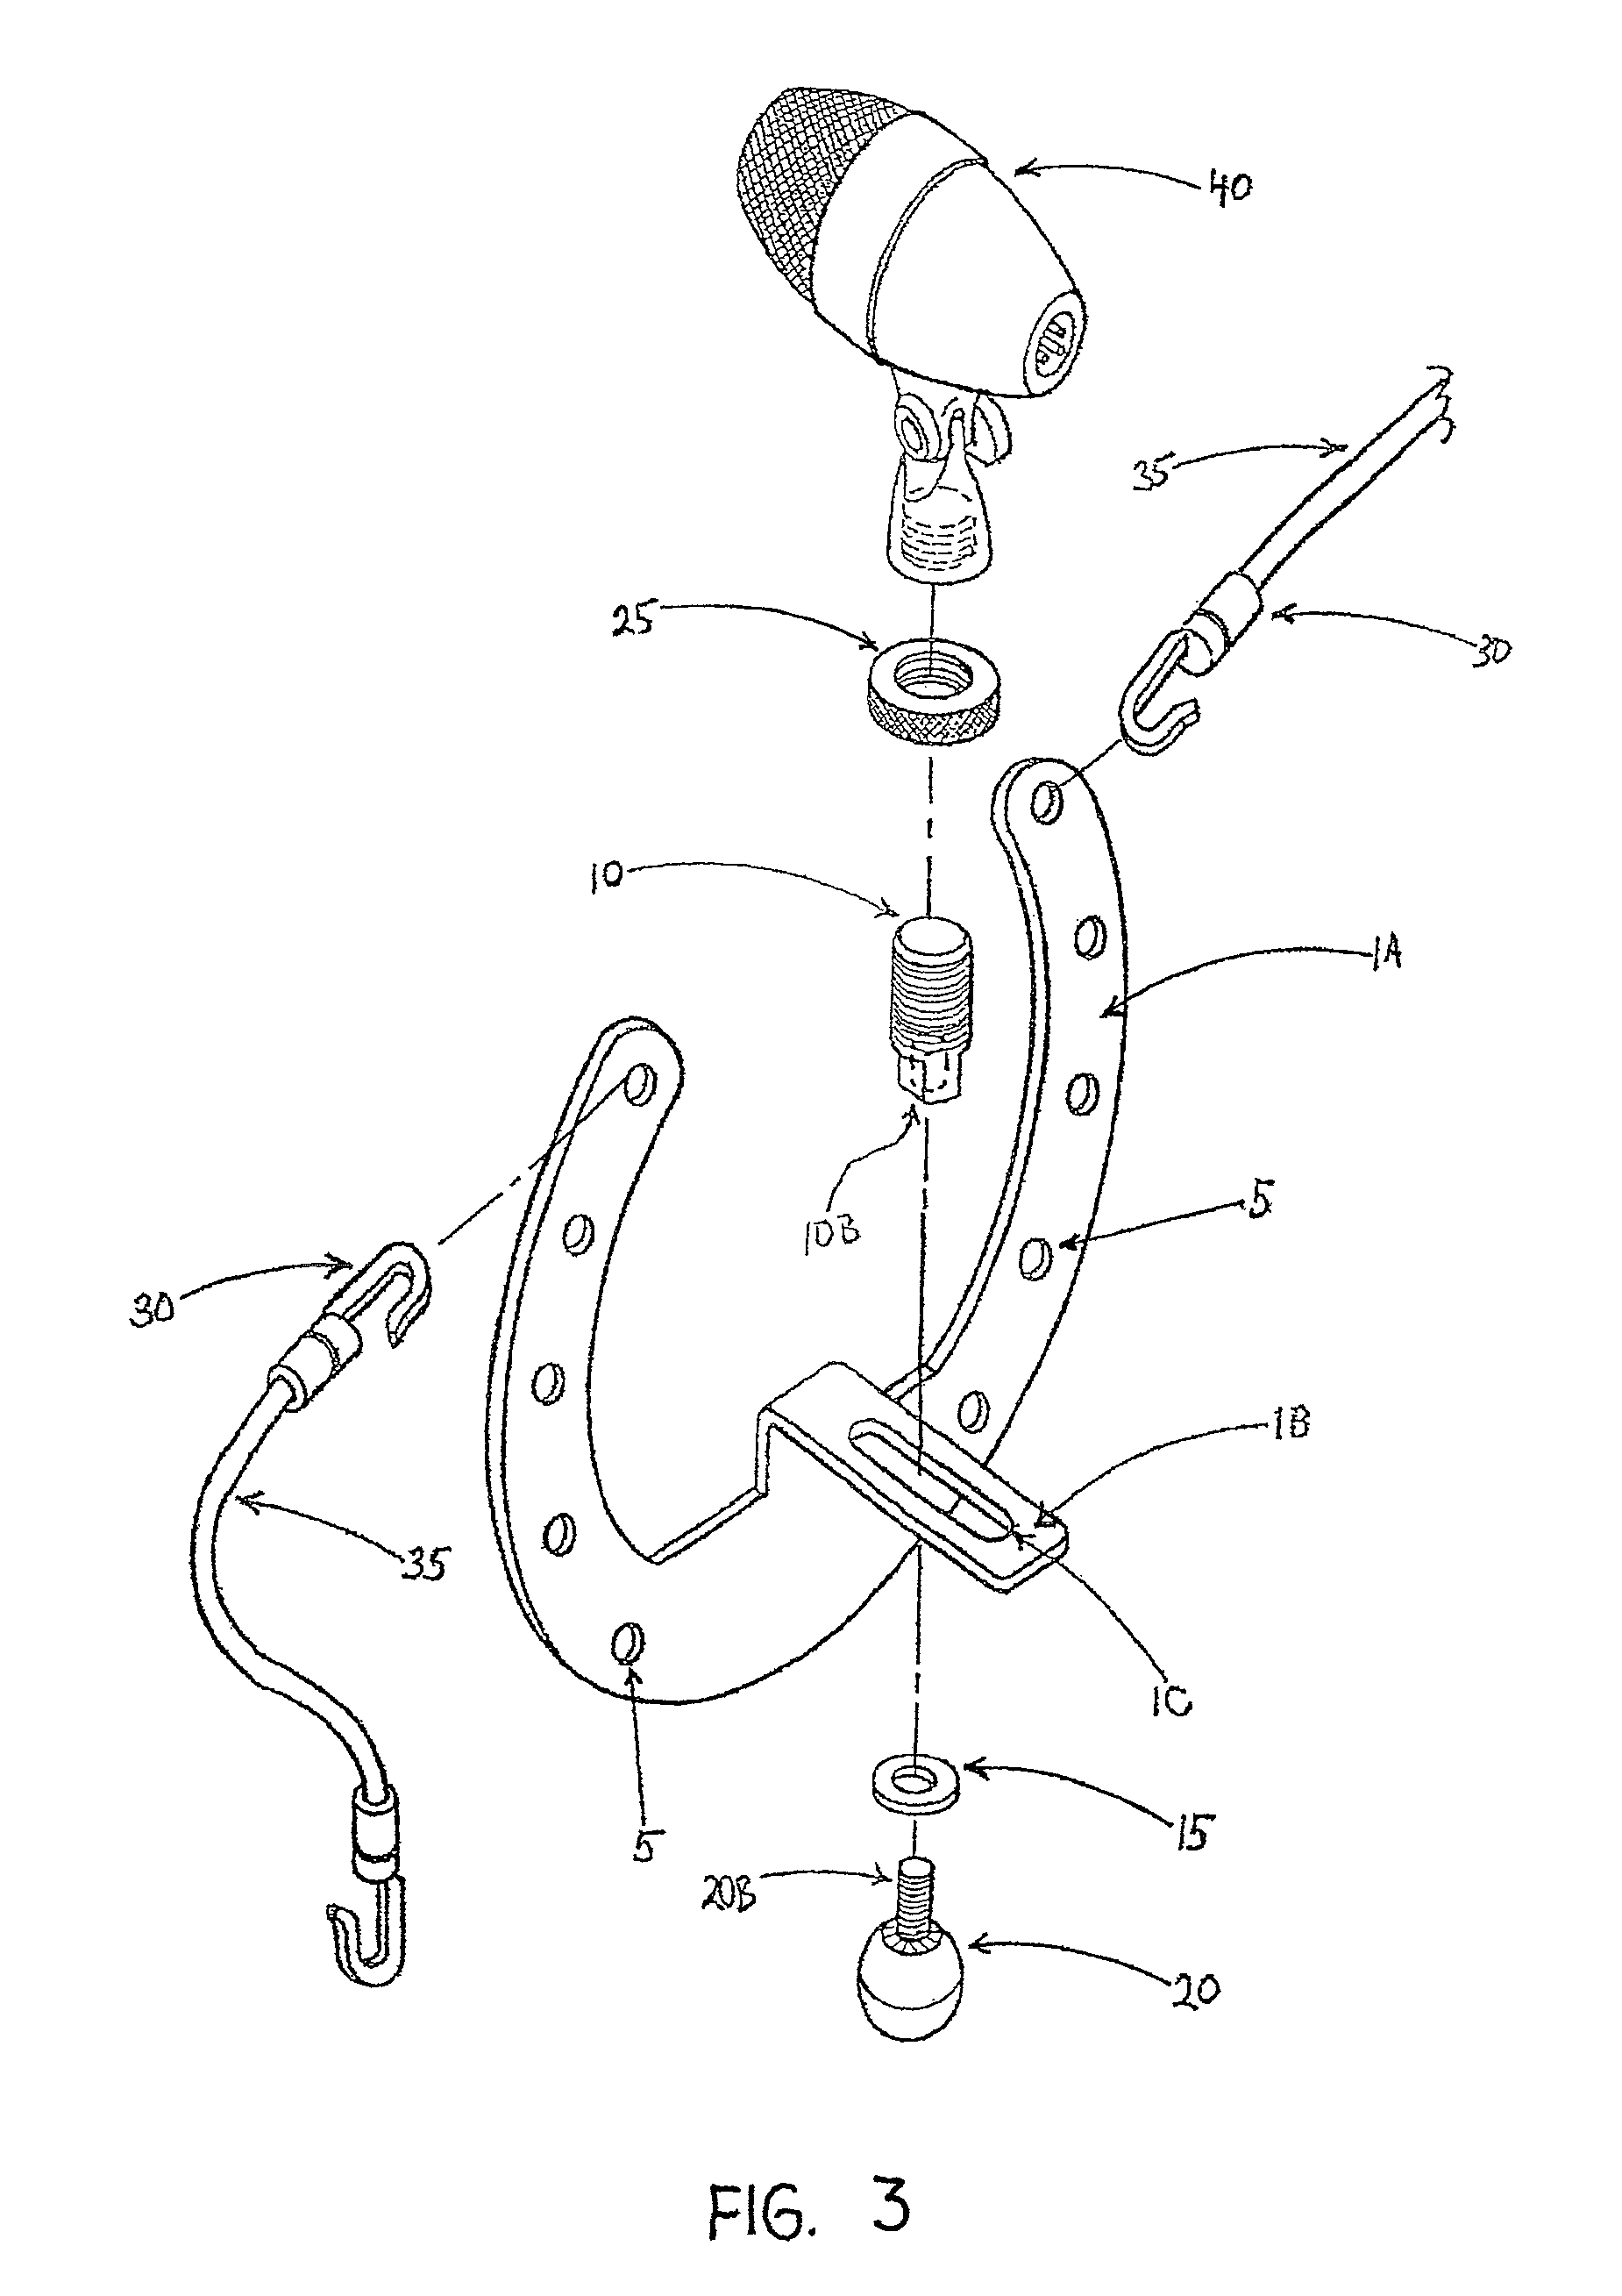 Stabilizing holder for sensory device